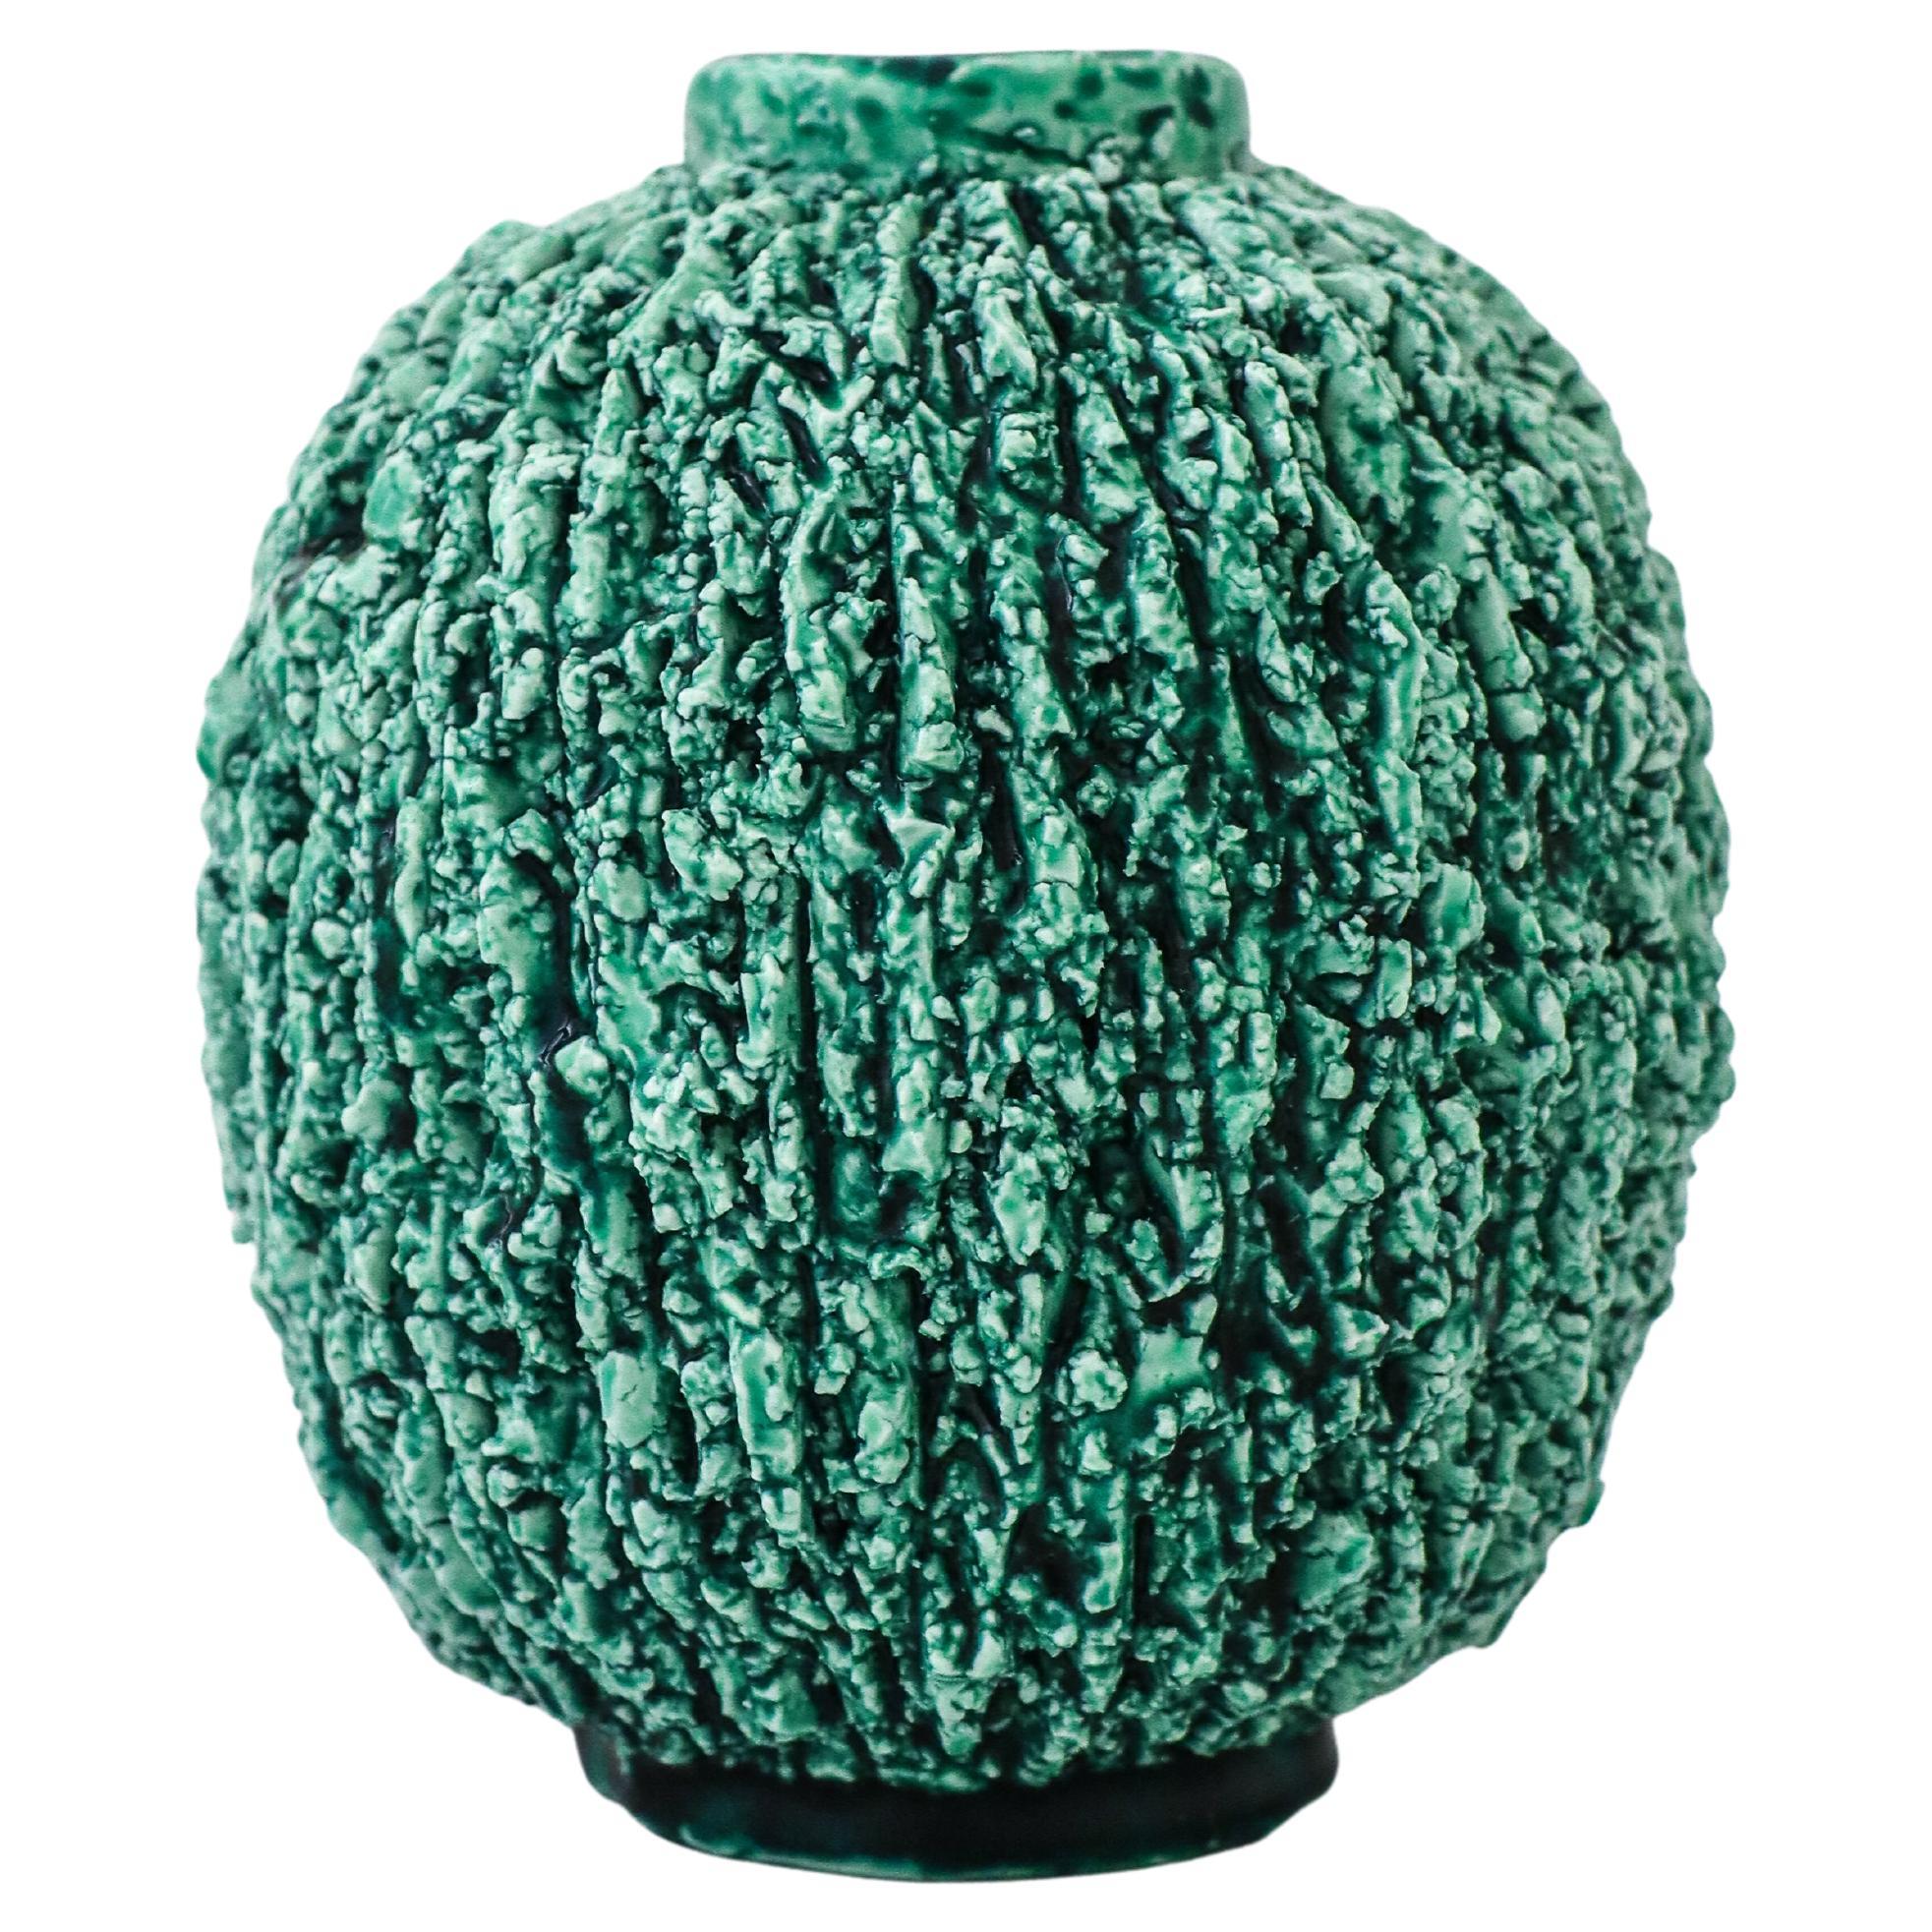 A Green Hedgehog vase - Chamotte - Gunnar Nylund - Rörstrand For Sale